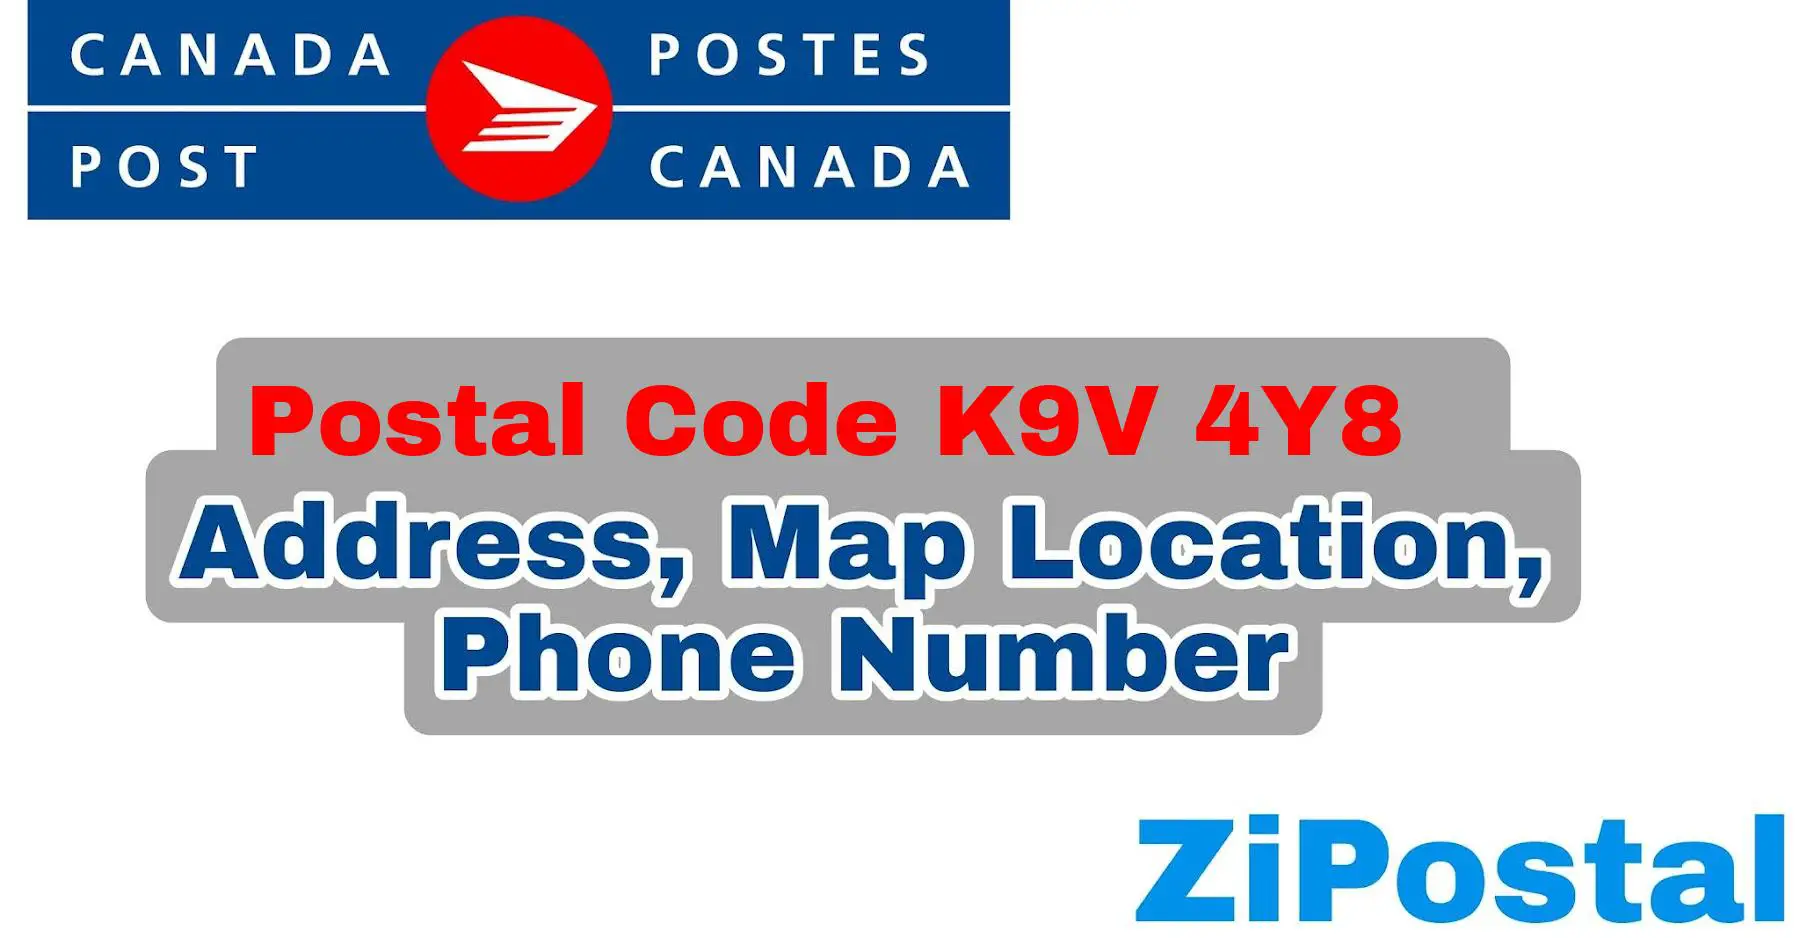 Postal Code K9V 4Y8 Address Map Location and Phone Number